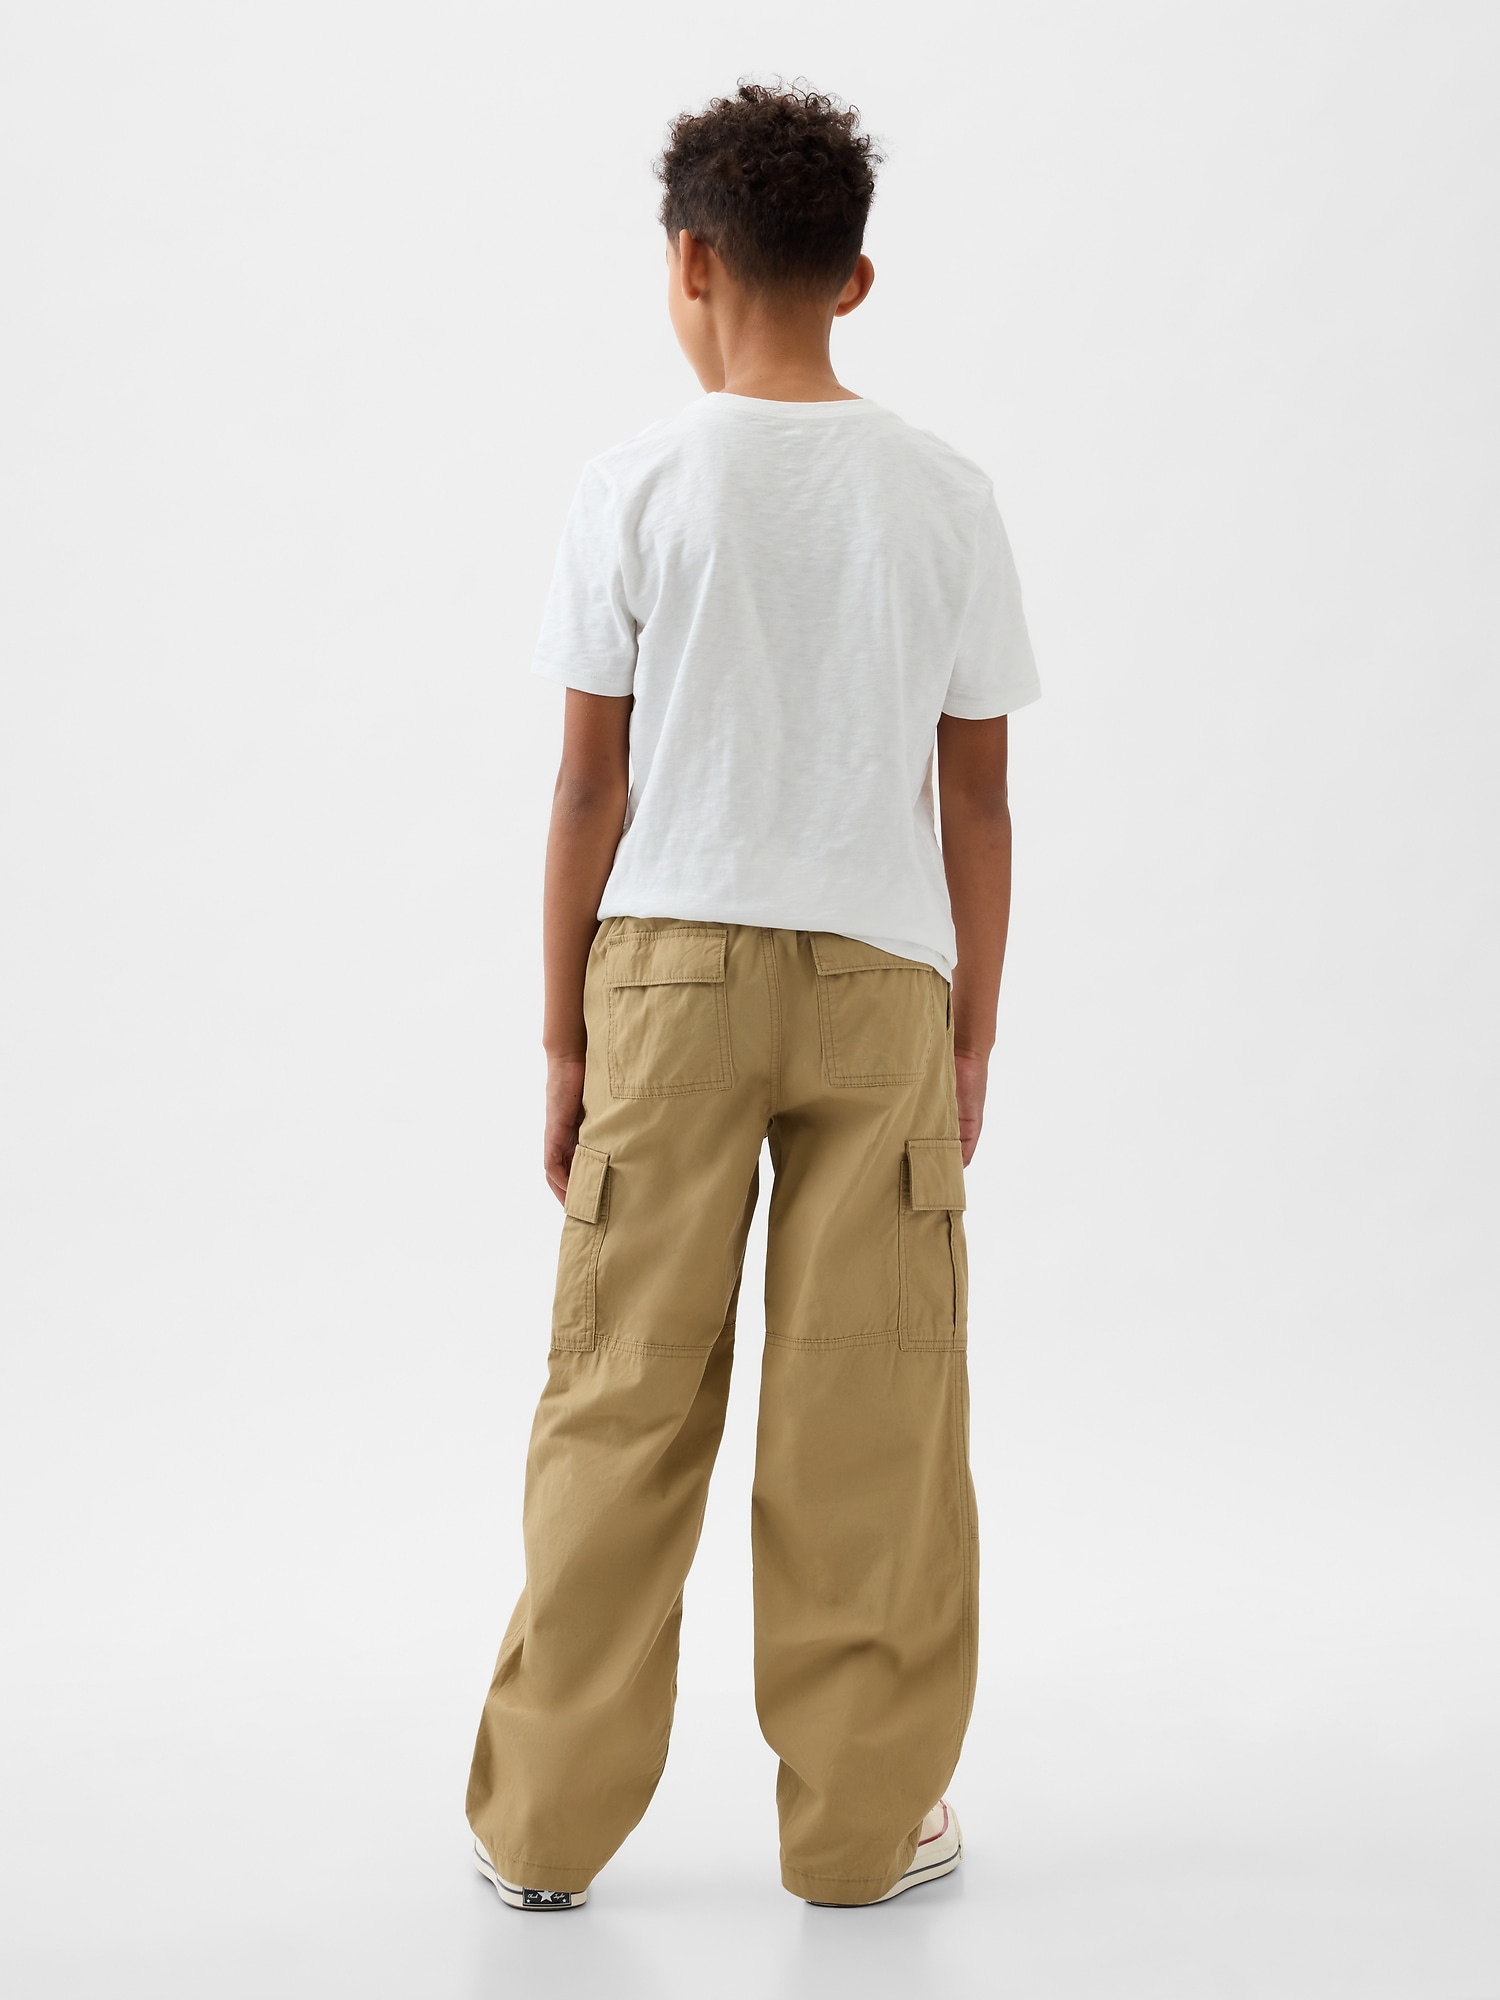 EACHIN Boys Pants Big Pocket Boy's Black Trousers Casual Sports Pants Cargo  Pants Spring Autumn Teenage